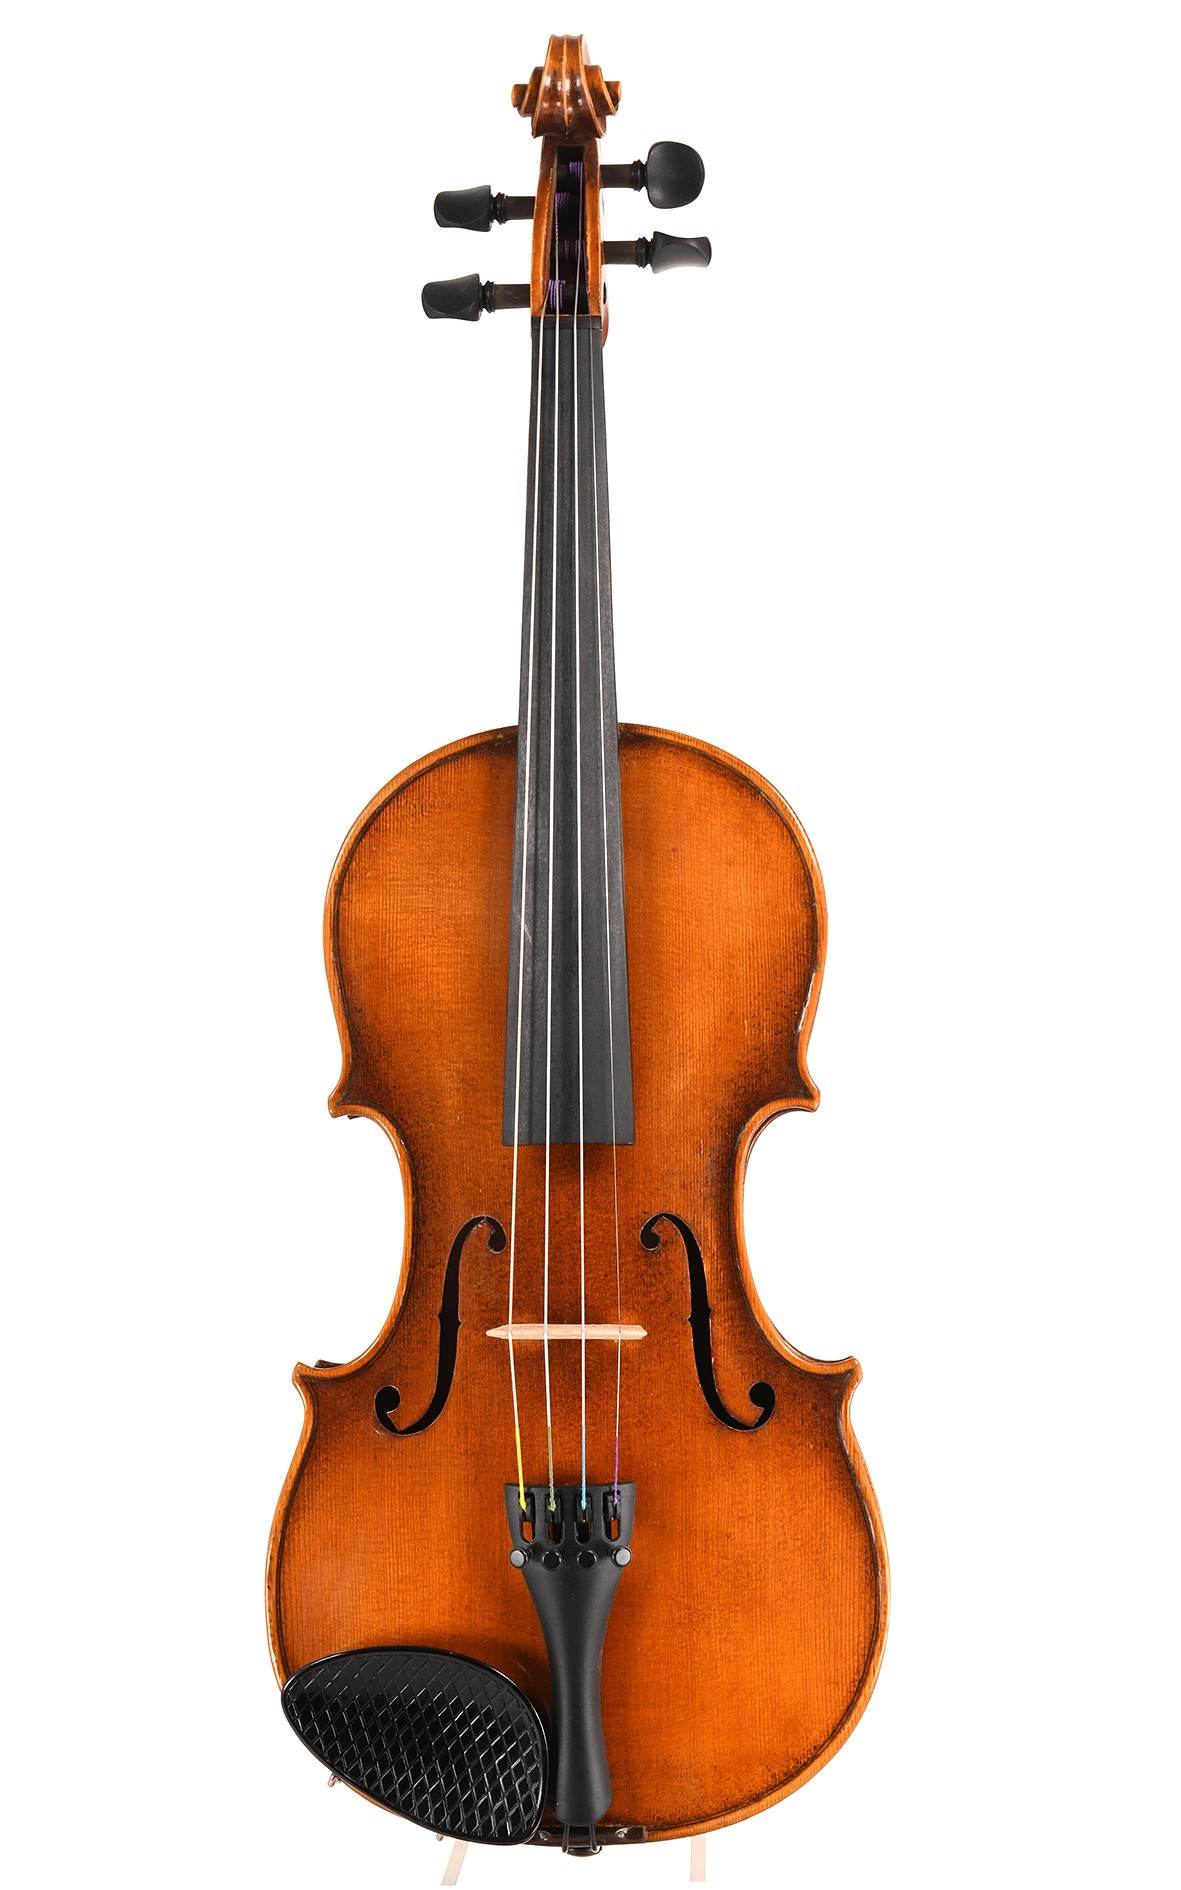 来自Bubenreuth的小提琴